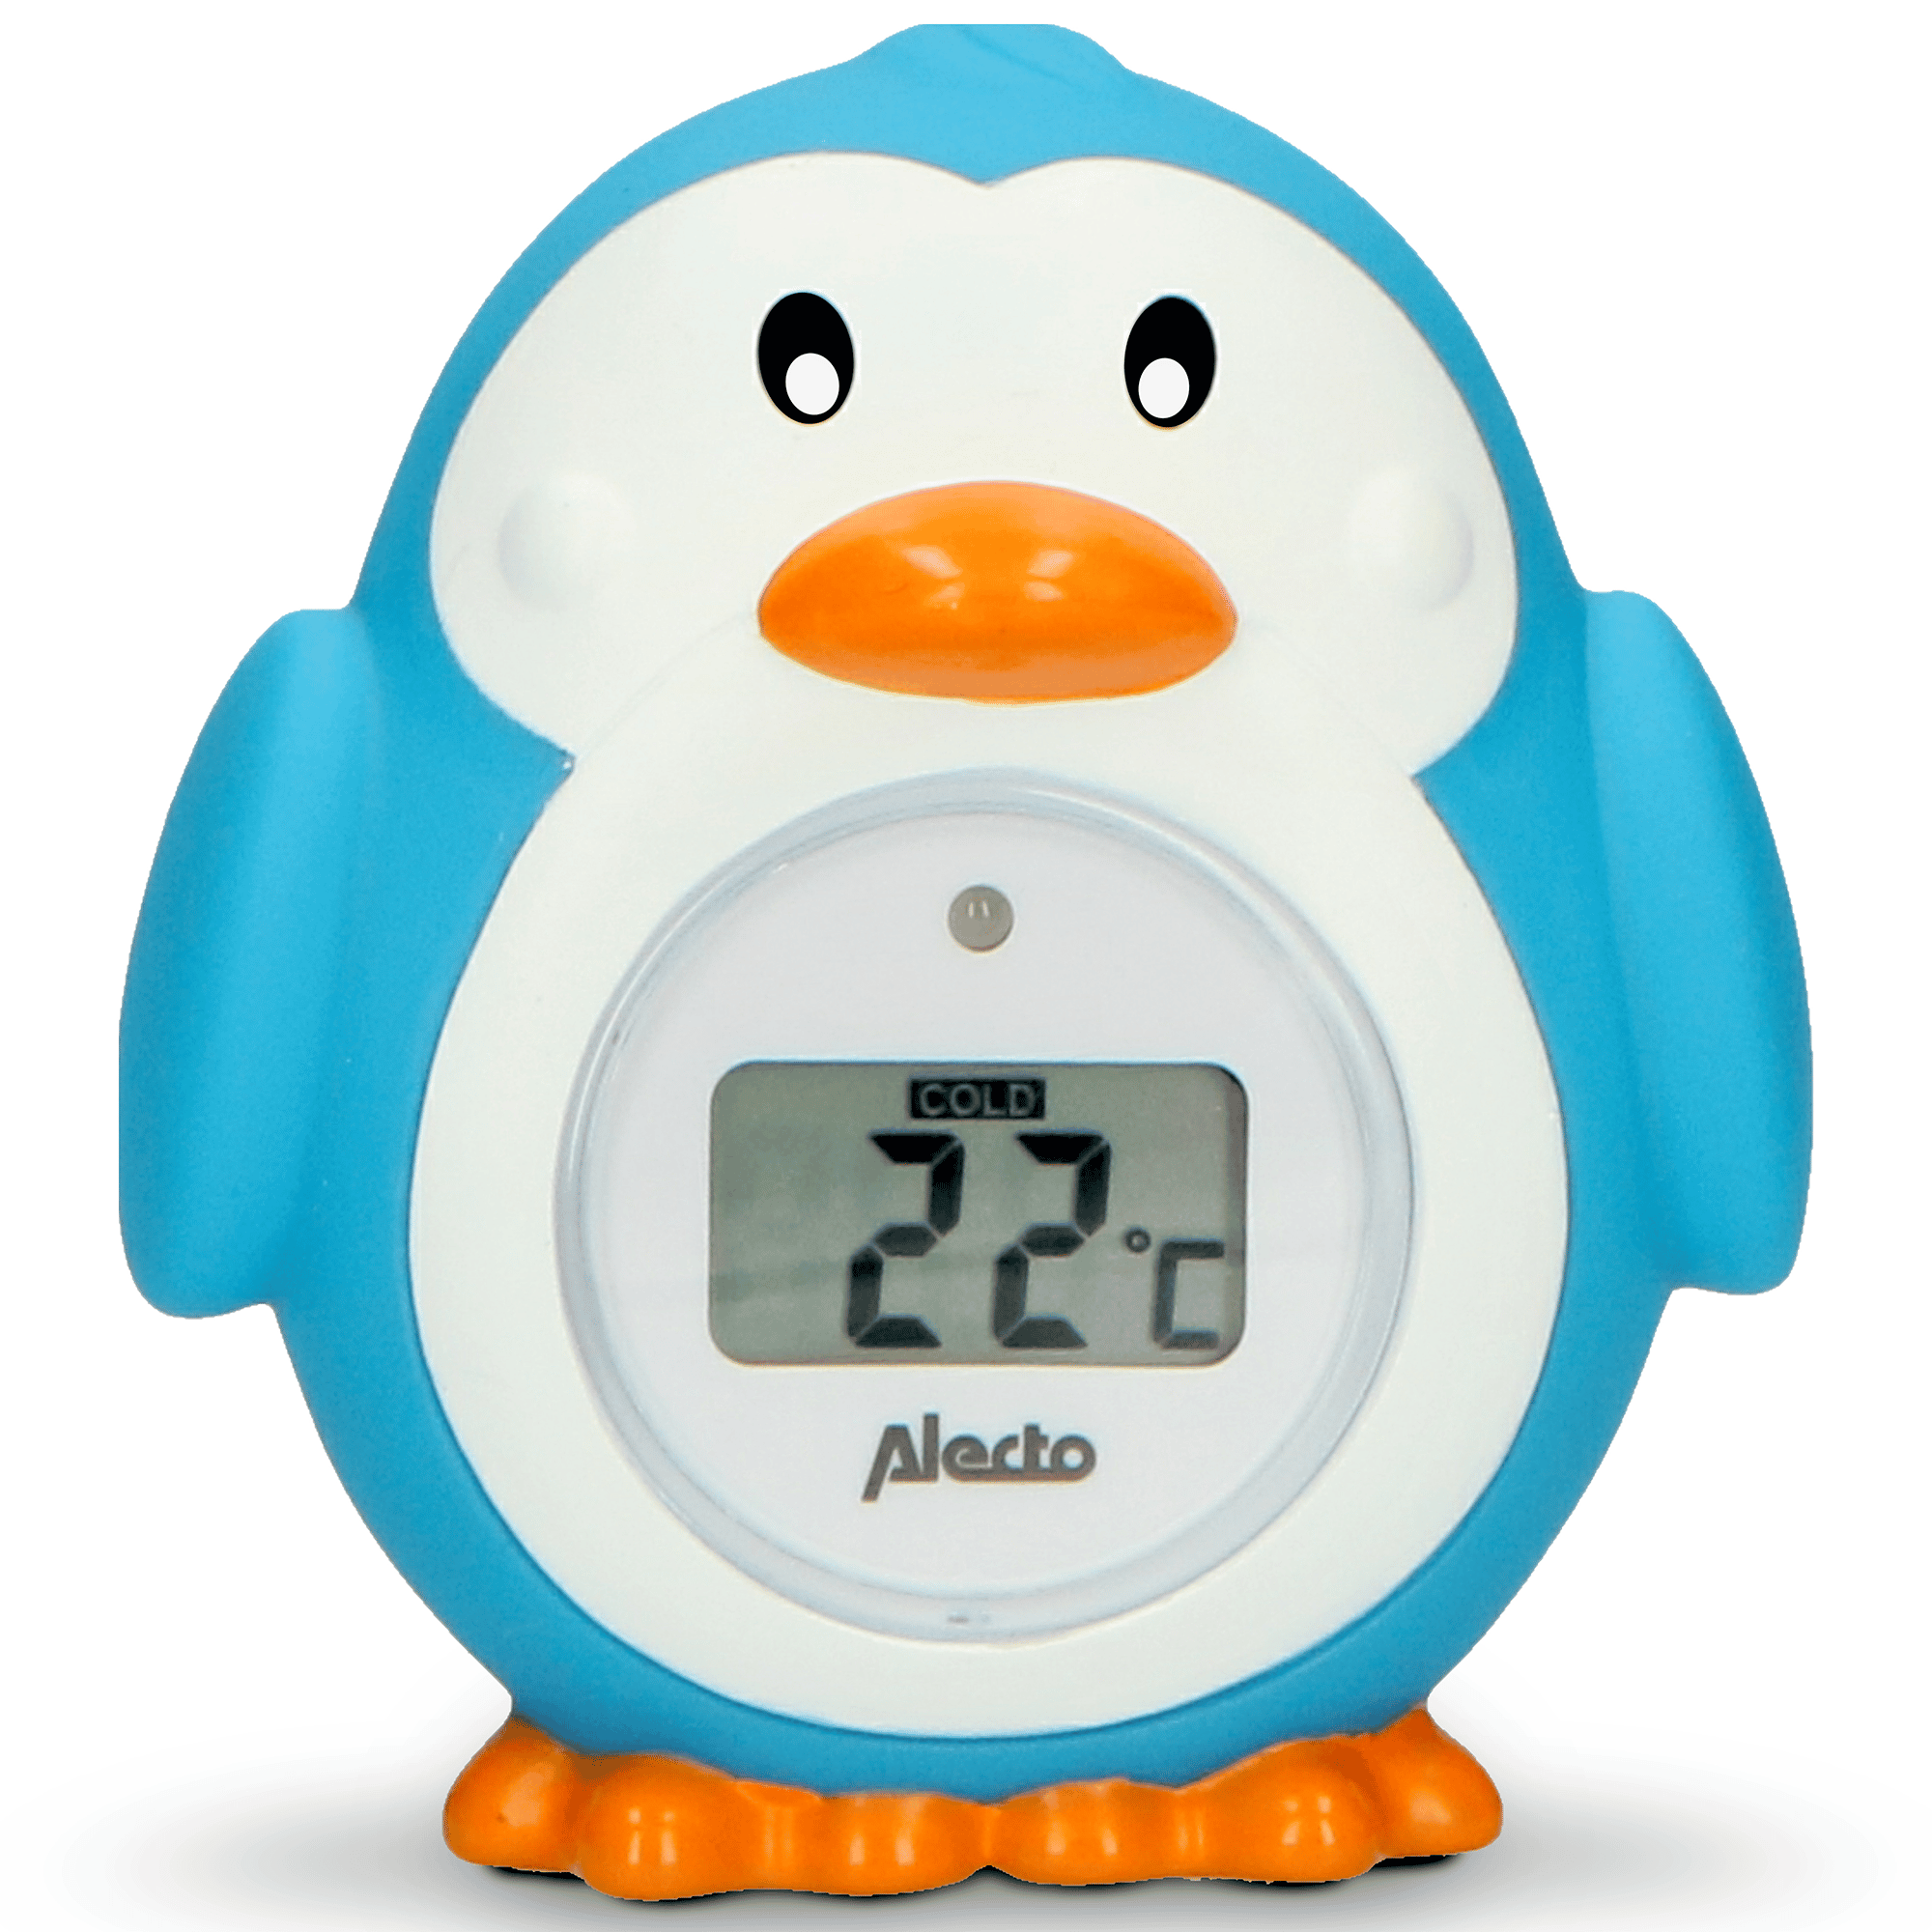 Raum- und Badethermometer Pinguin BC-11 Alecto baby Blau 2000583325000 1